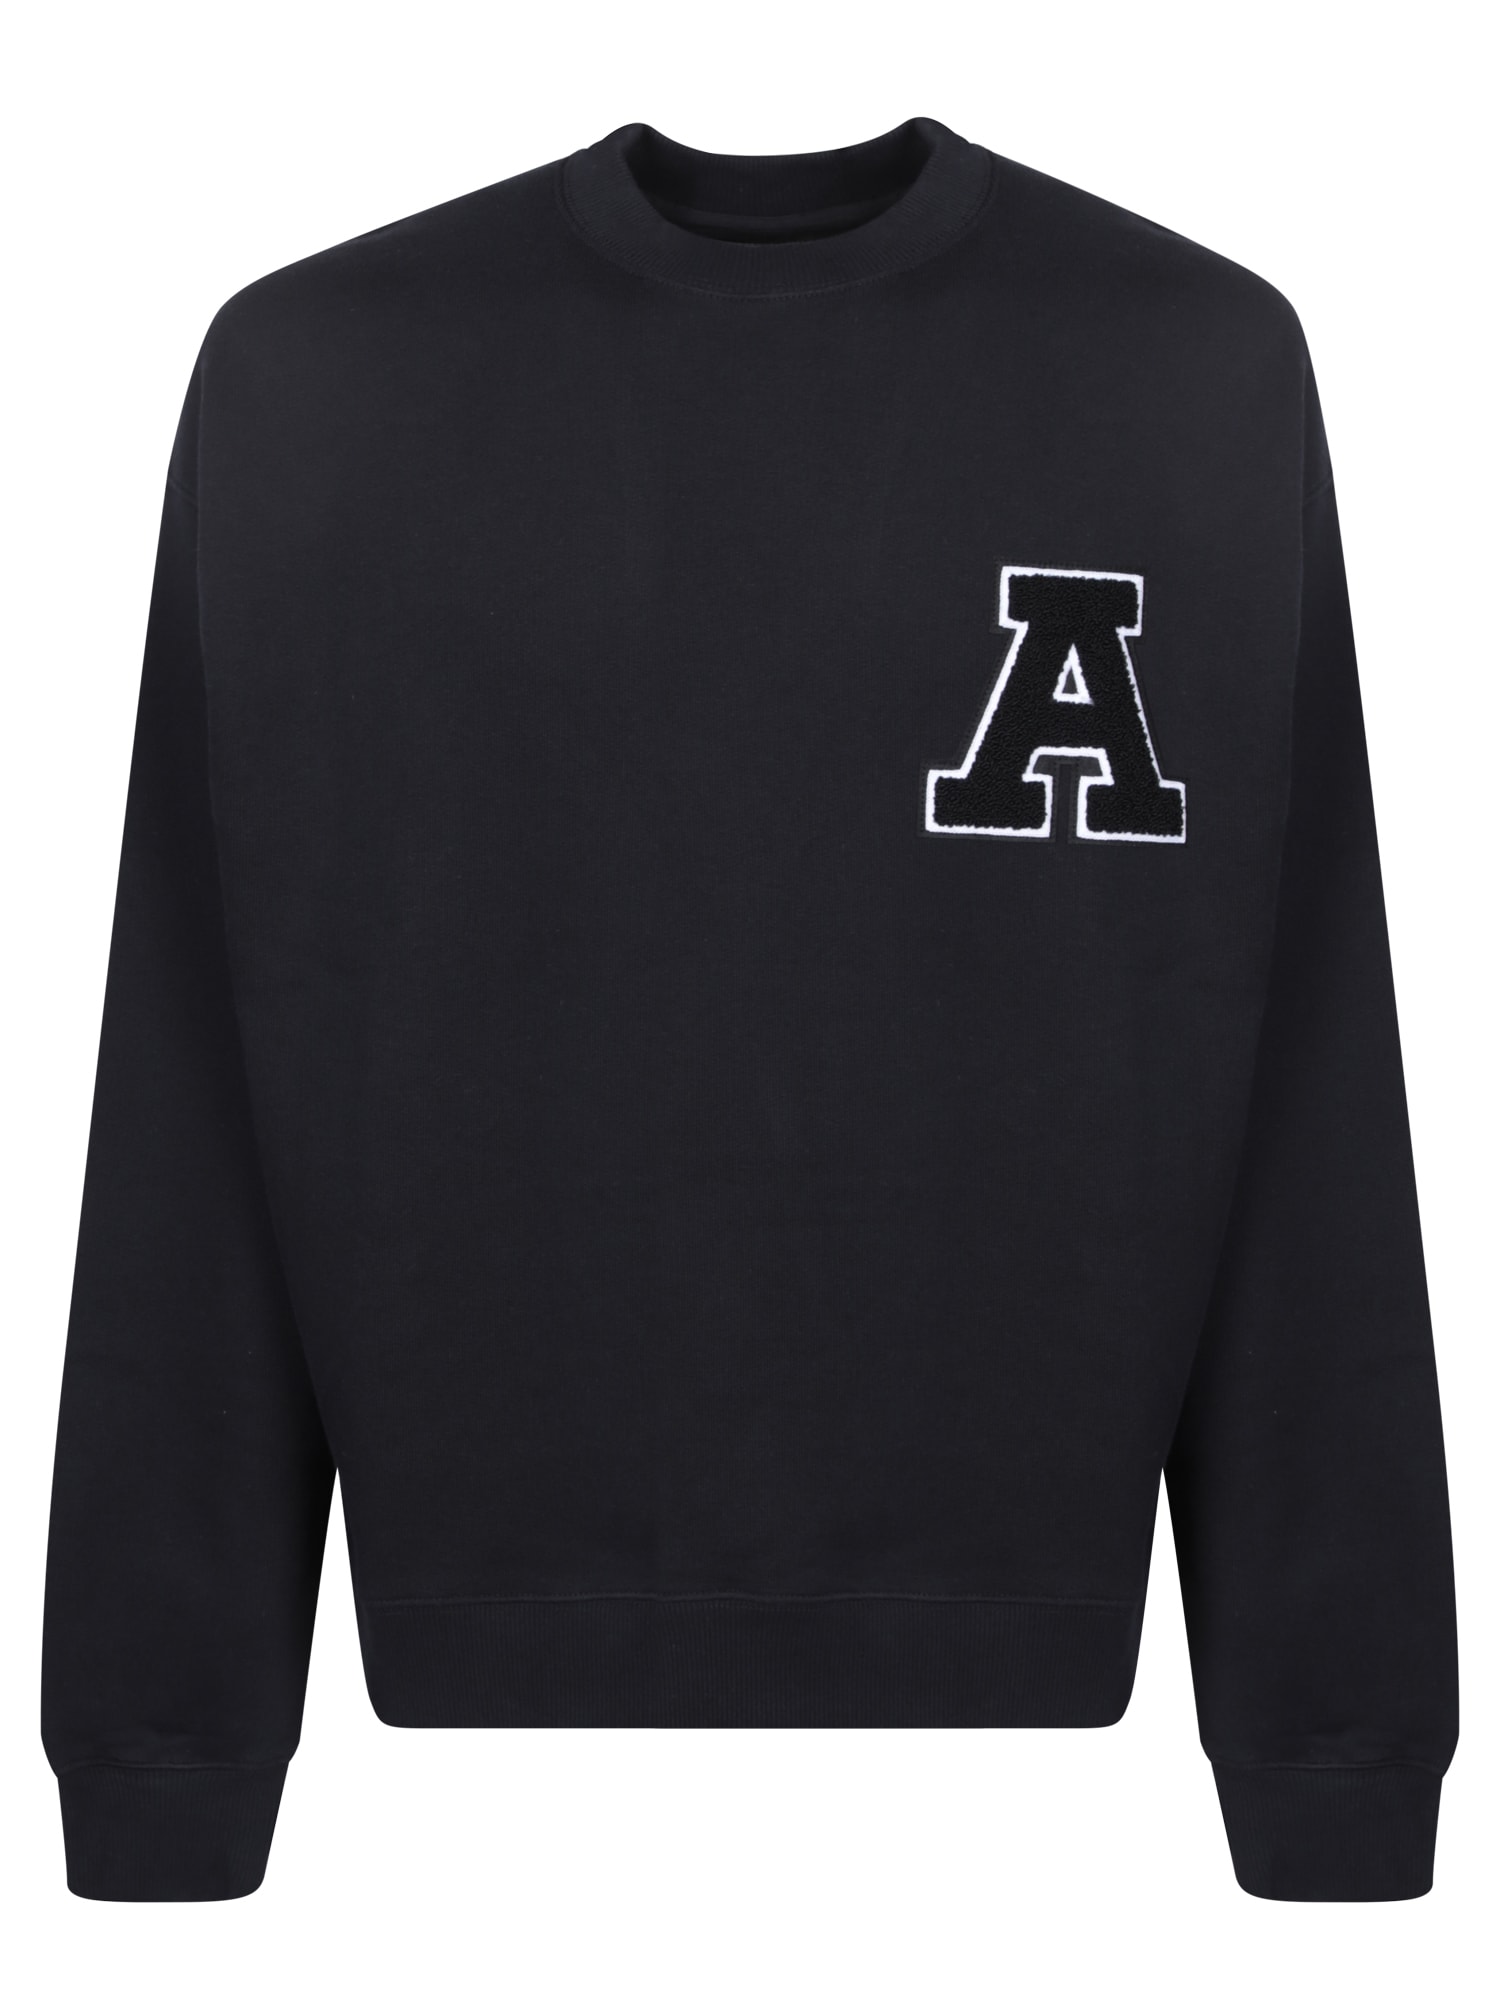 Shop Axel Arigato Team Black Sweatshirt